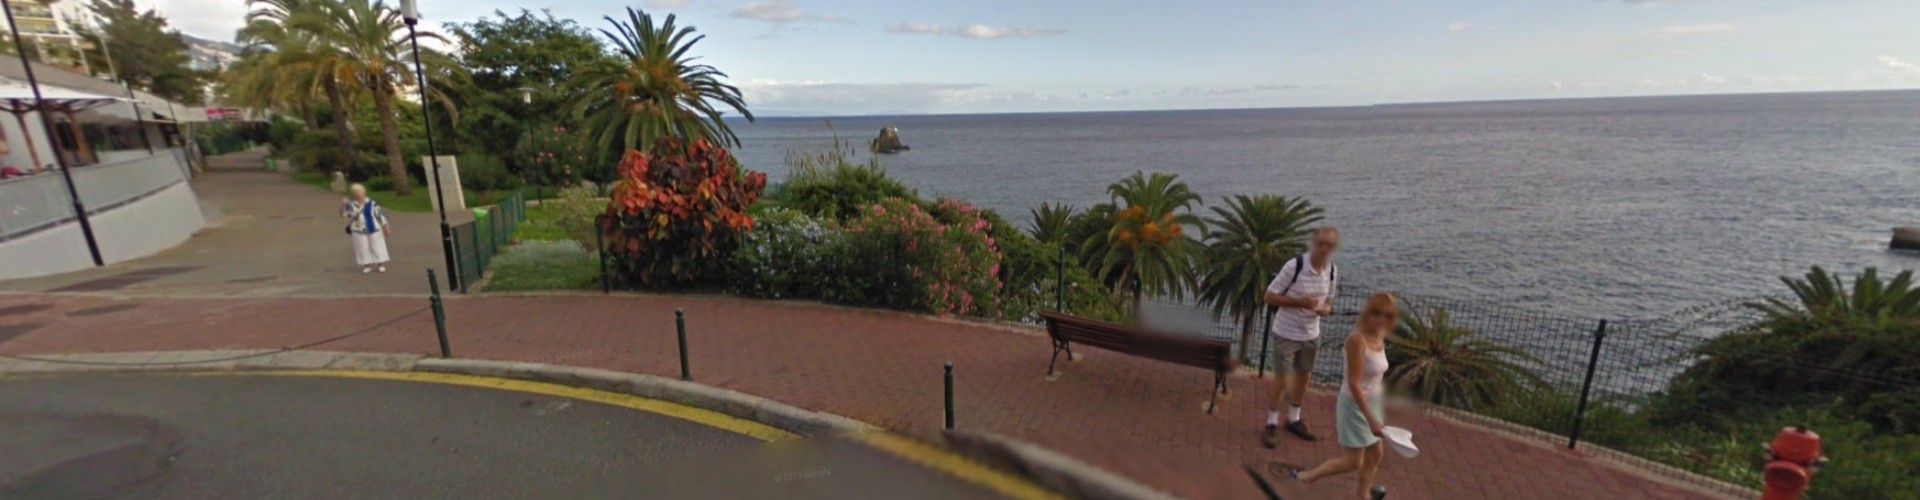 Jardim Panoramic Gardens, Funchal, Madeira